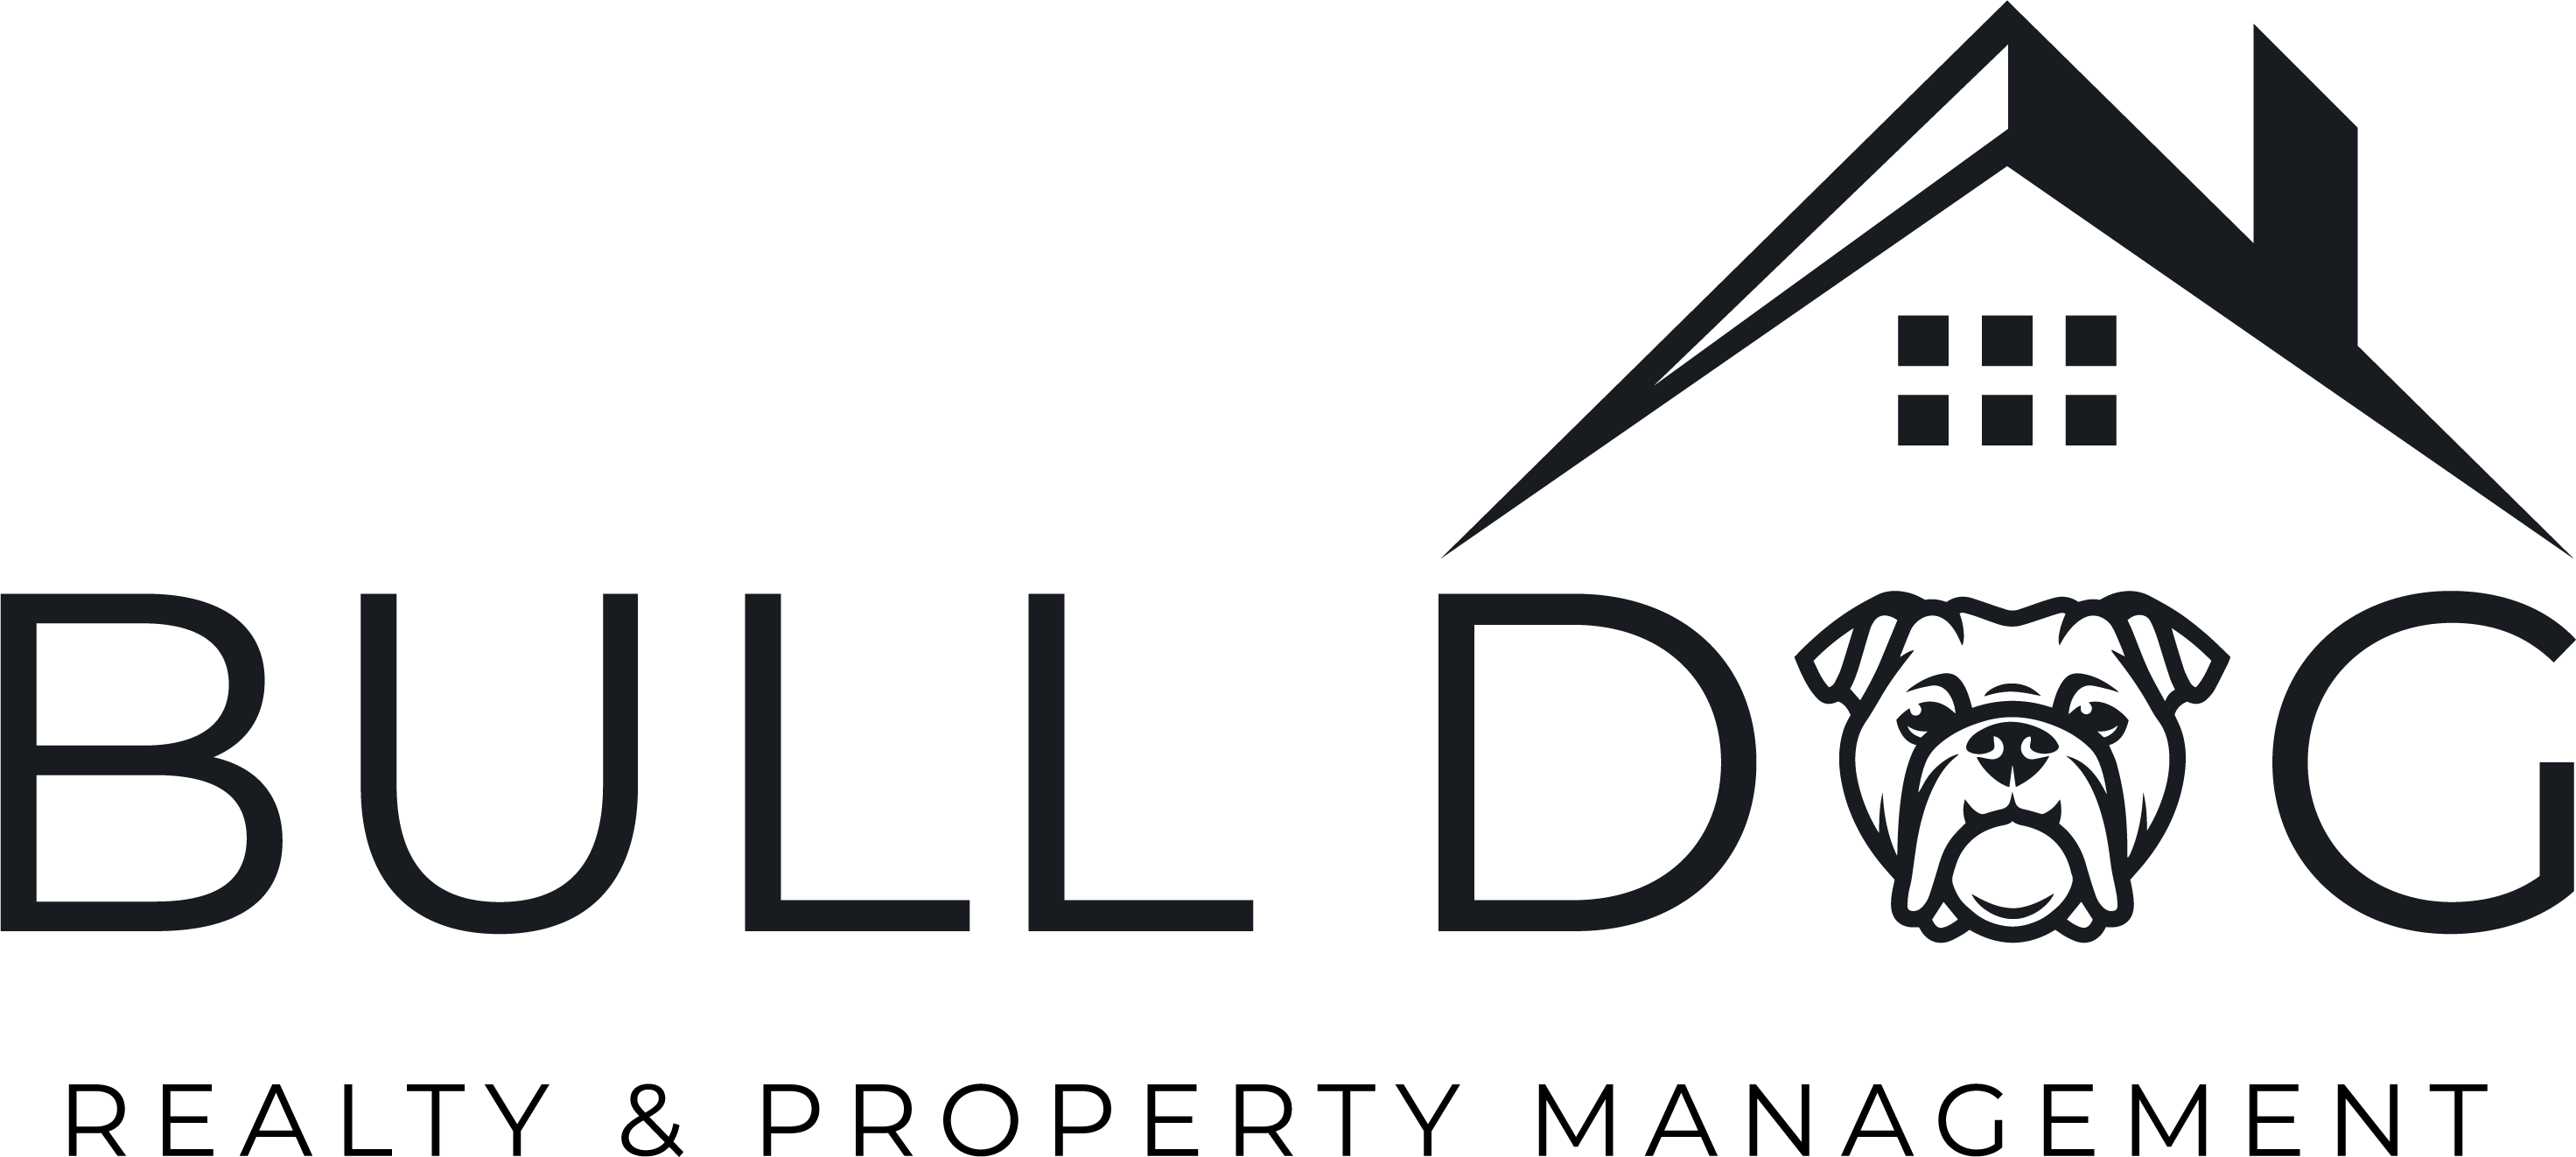 Bulldog Realty & Property Management logo